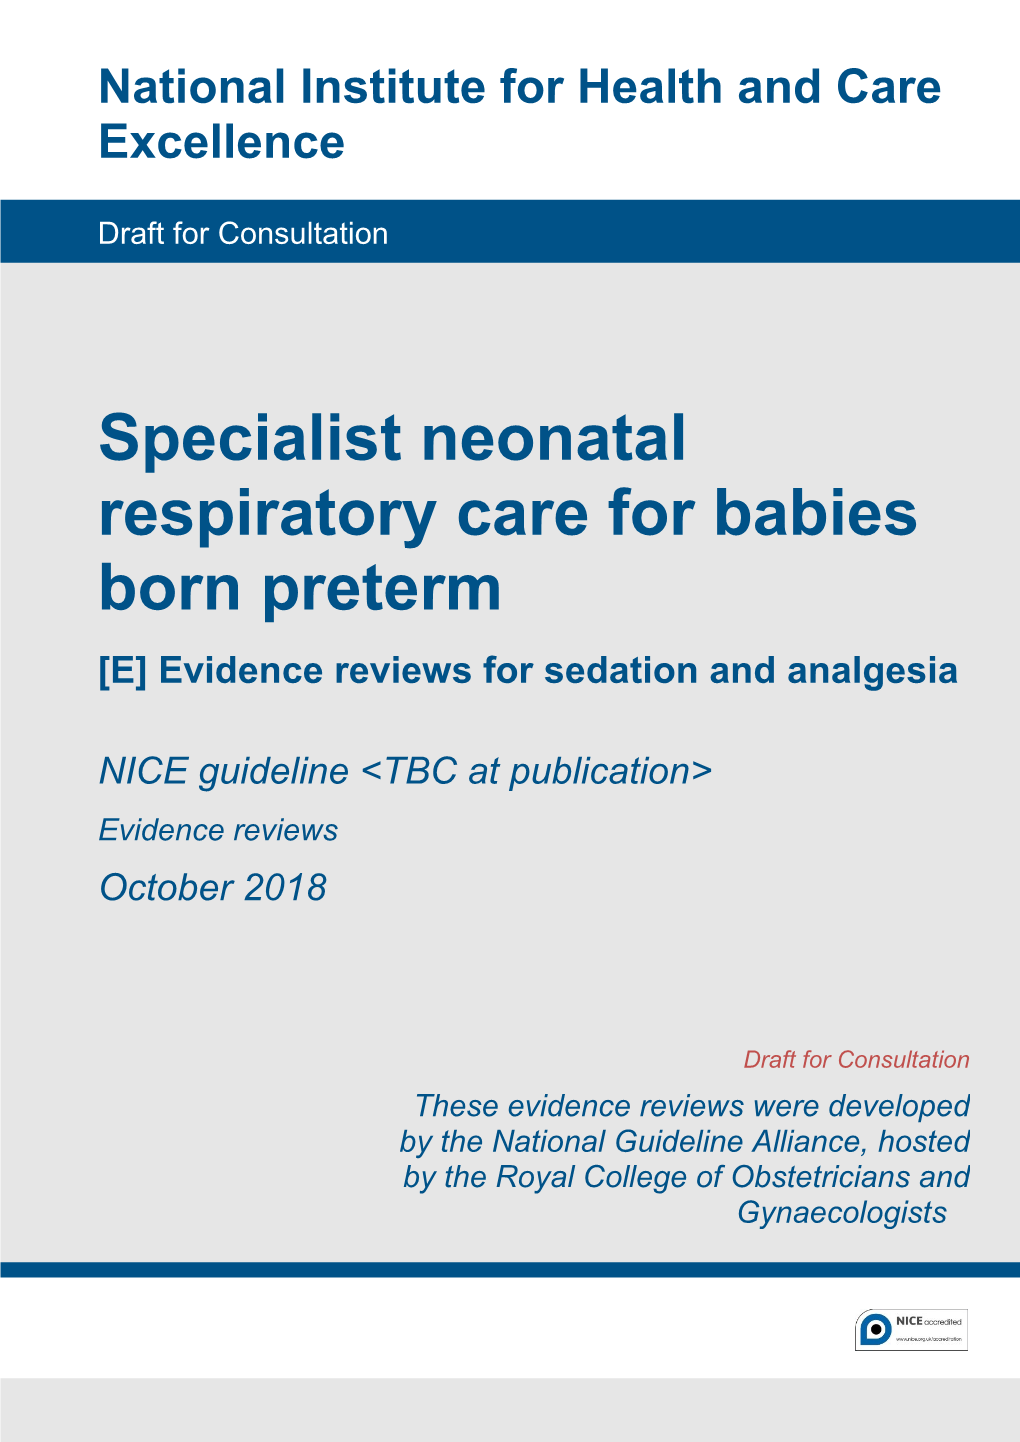 Specialist Neonatal Respiratory Care for Babies Born Preterm [E] Evidence Reviews for Sedation and Analgesia